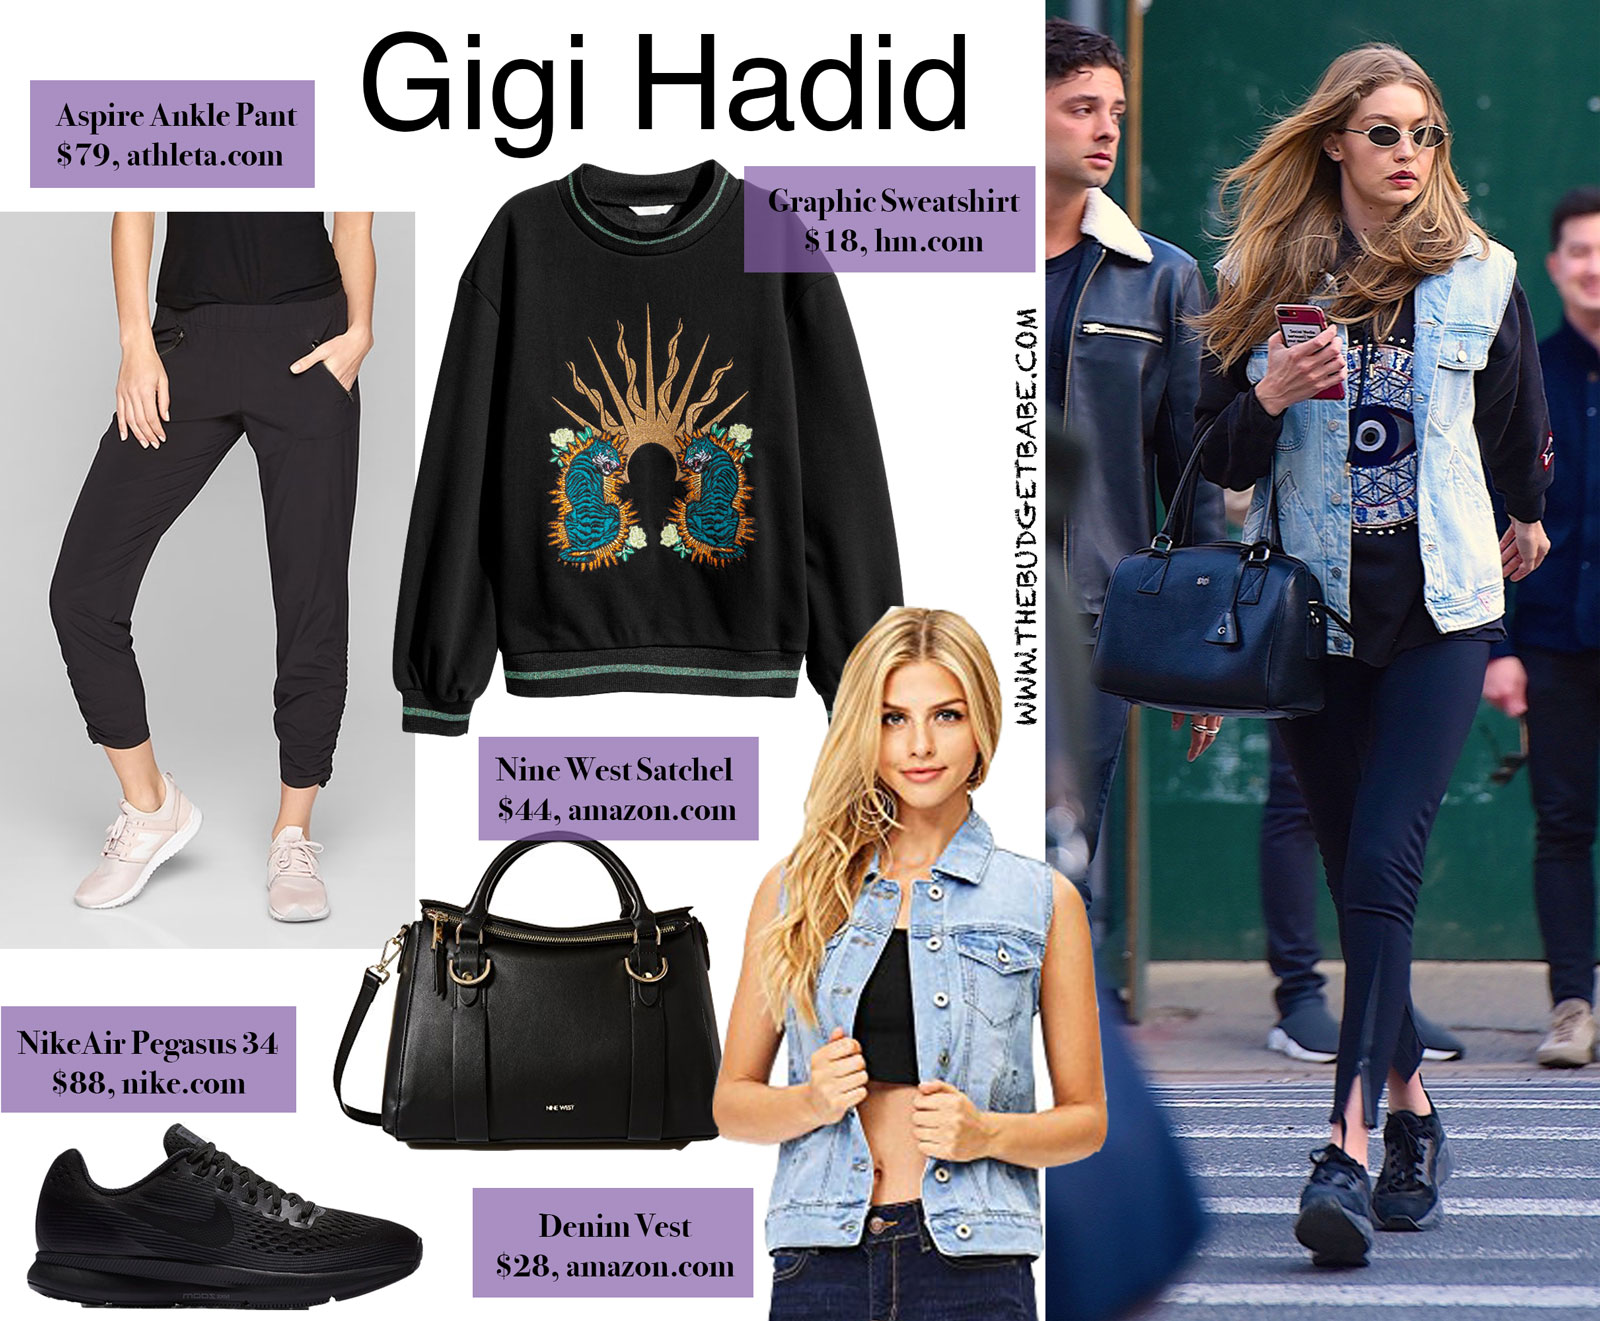 Gigi Hadid's Denim Vest and Graphic Sweatshirt